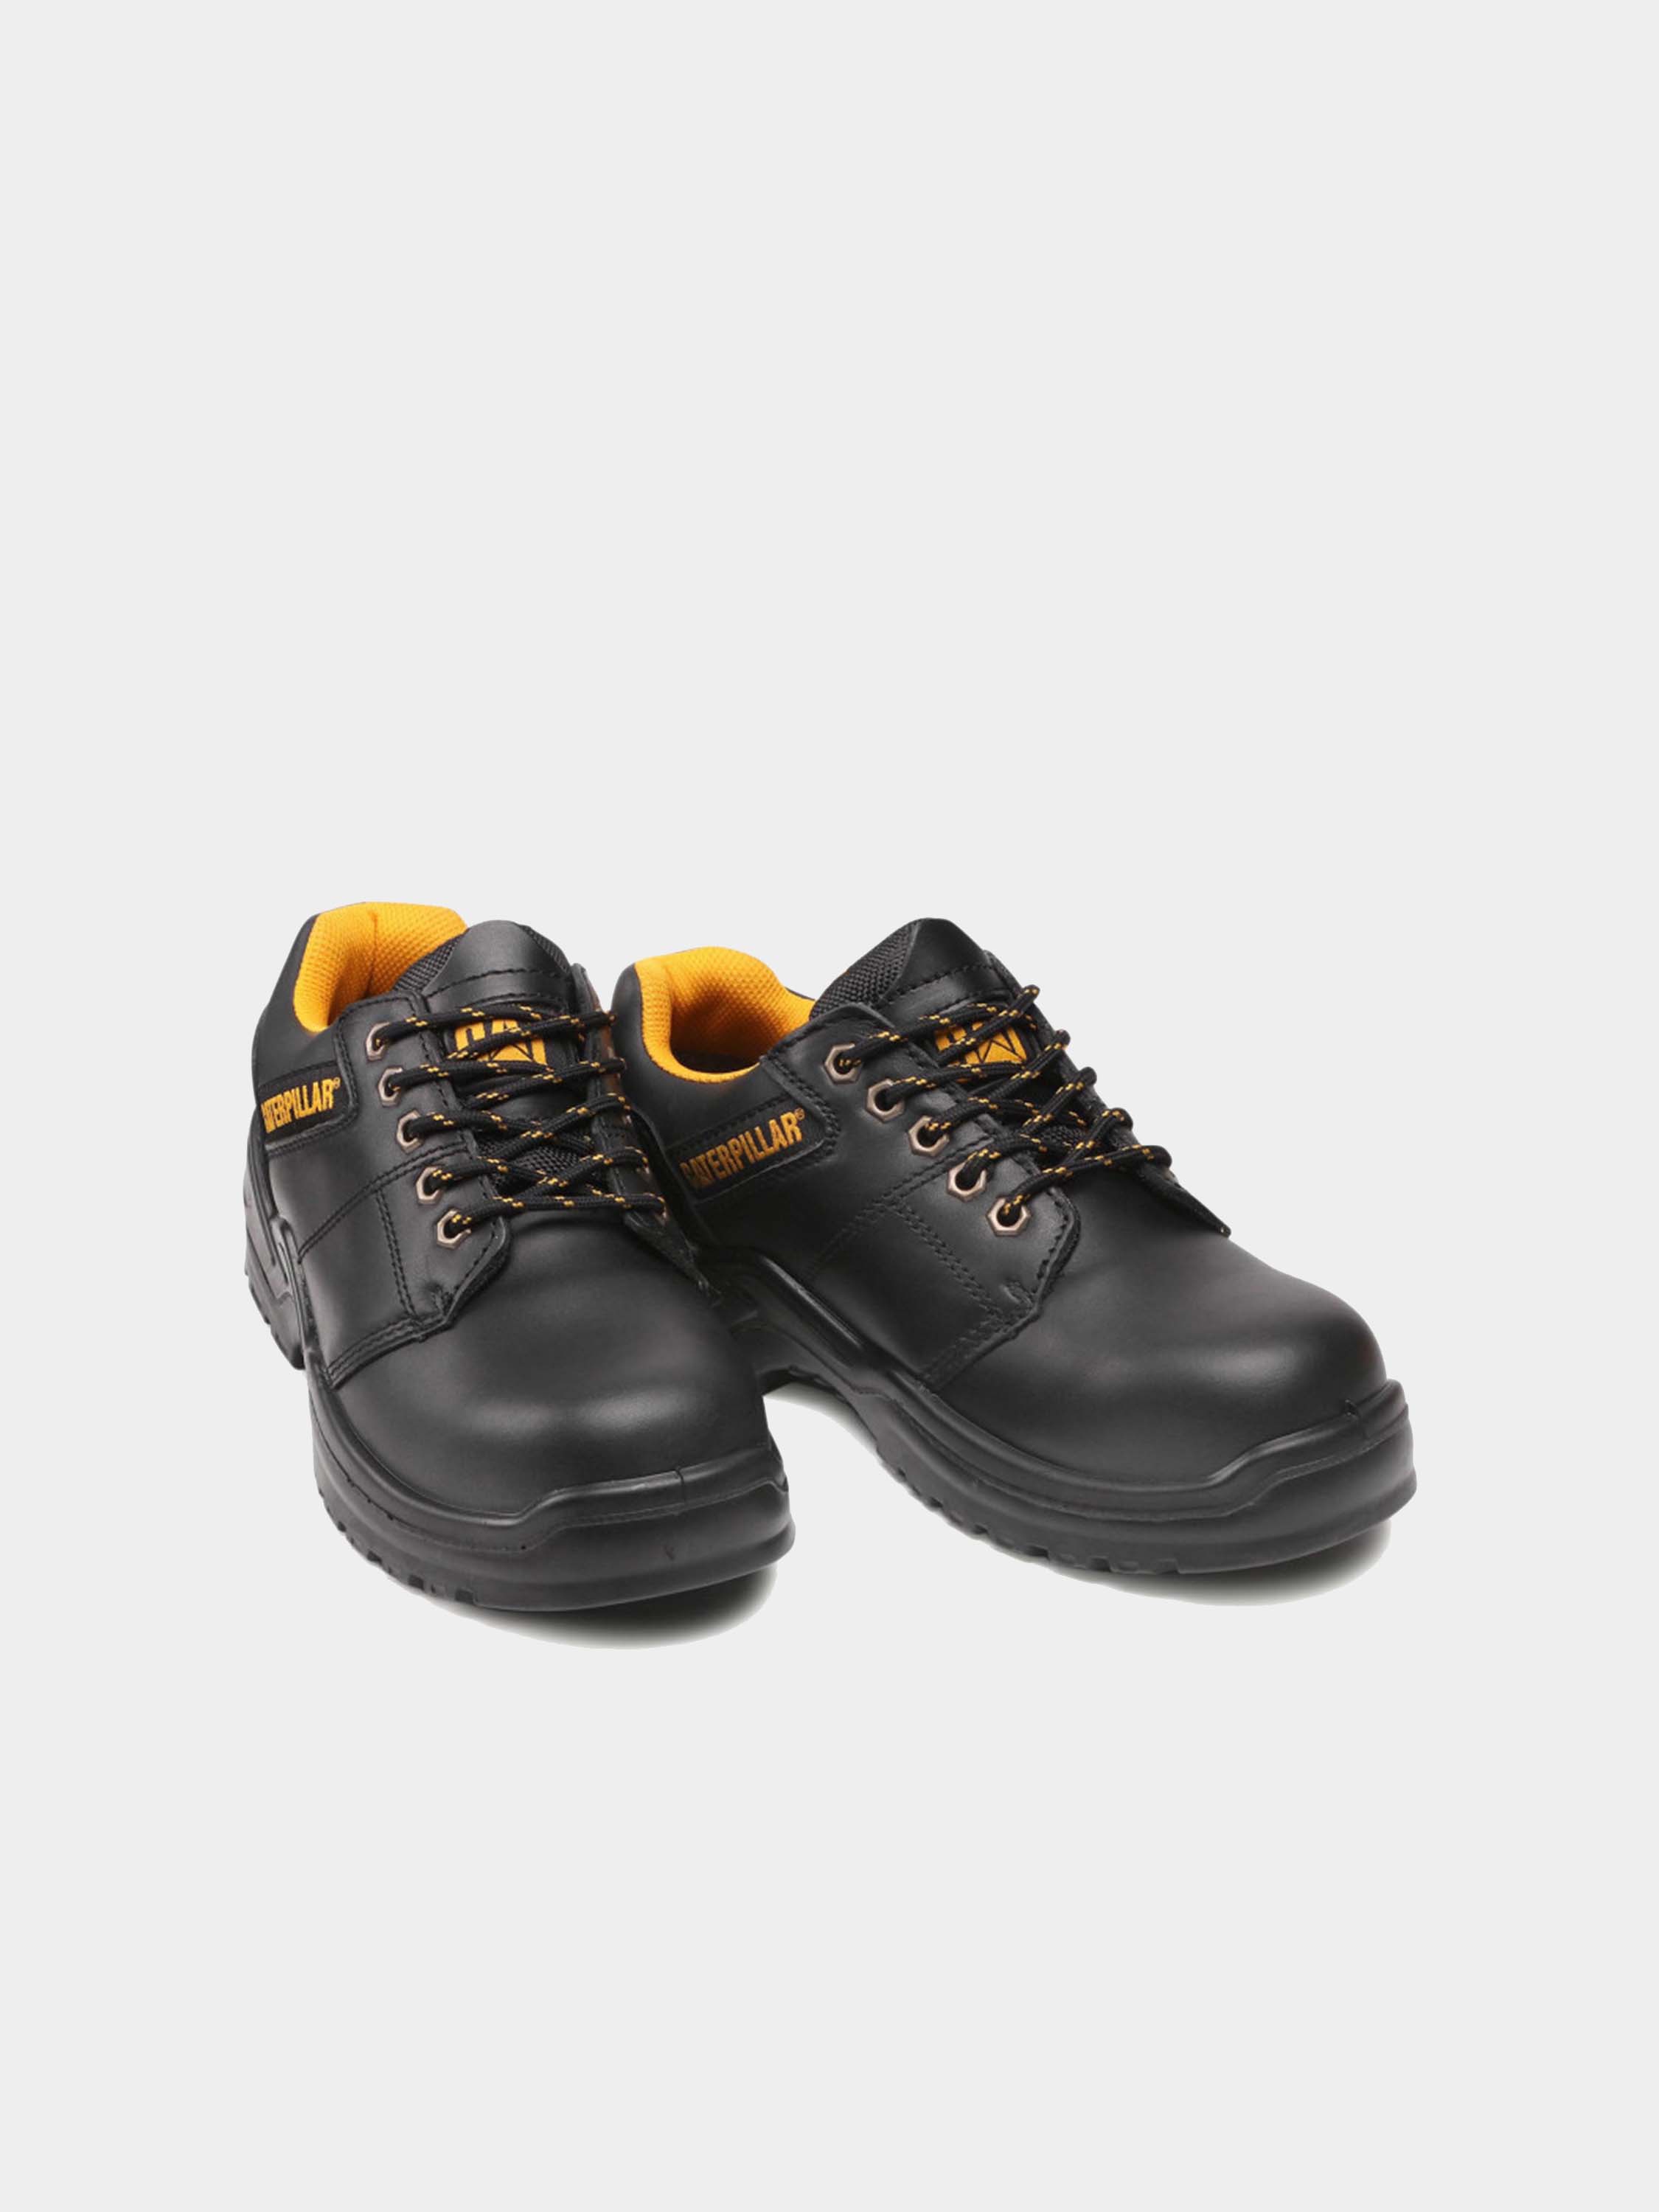 Caterpillar Men's Striver Lo ST S3 S Safety Shoes #color_Black